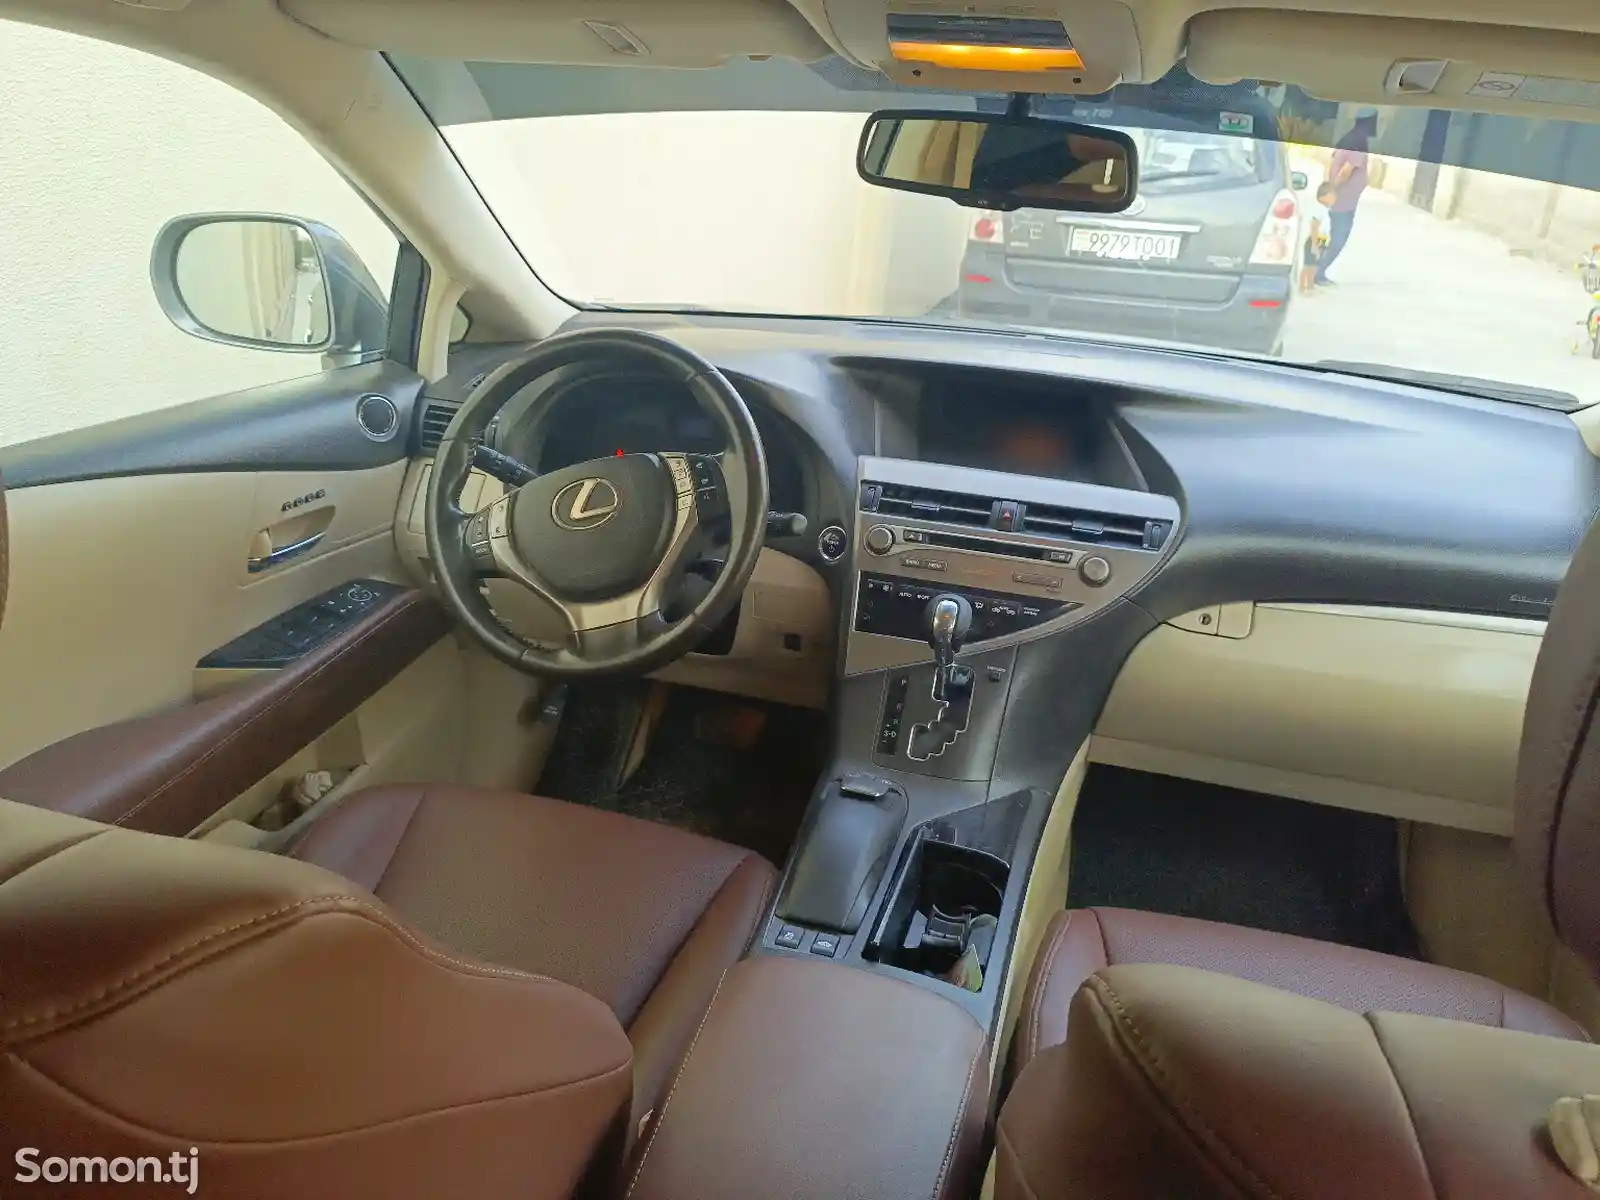 Lexus RX series, 2013-11